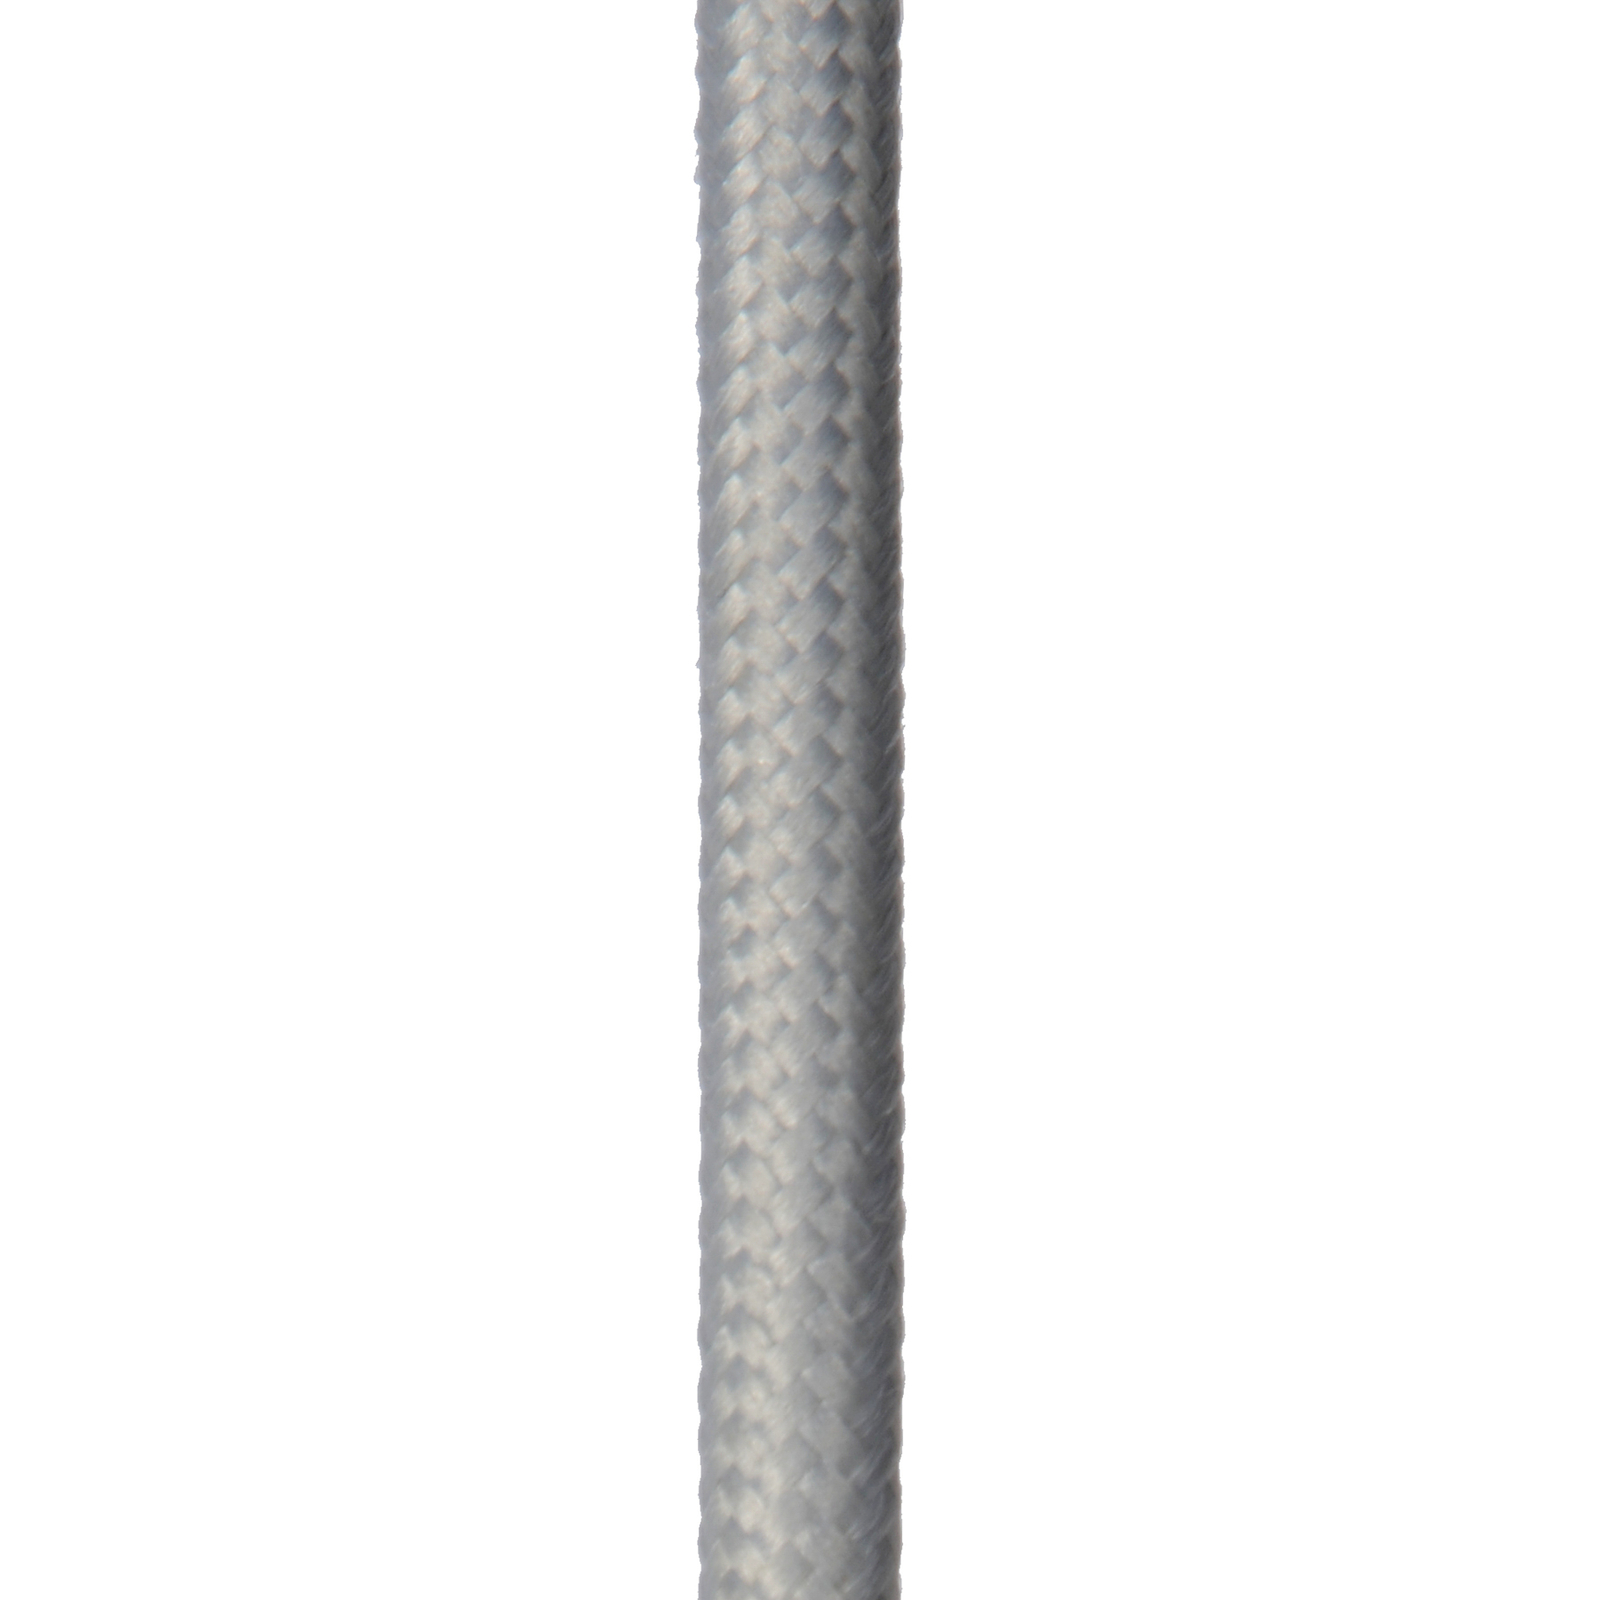 Topher hængelampe, Ø 30 cm, mat krom/opal